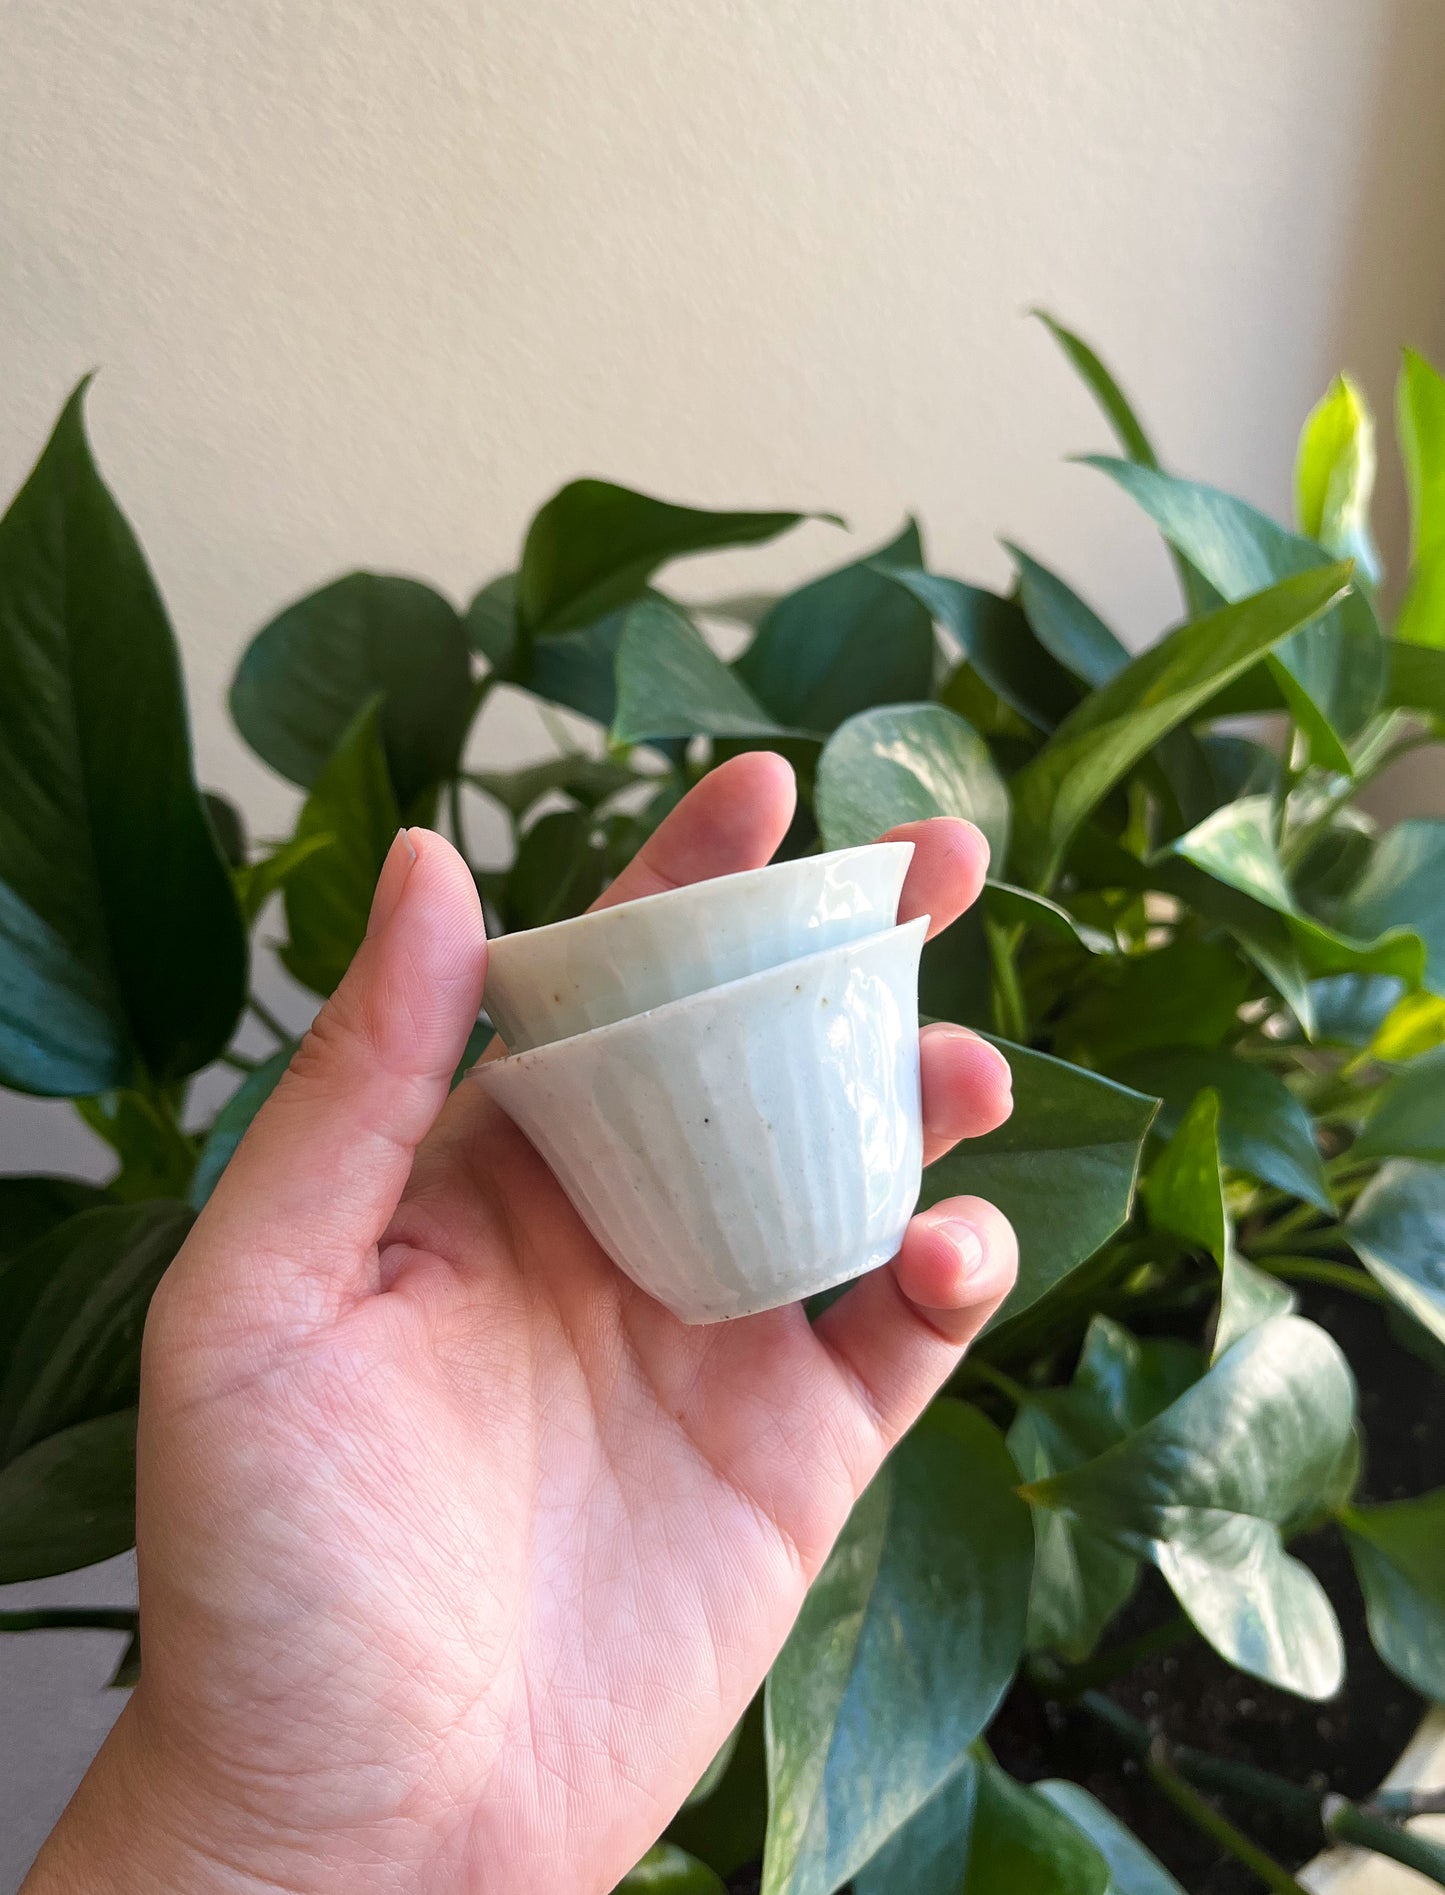 Handcrafted Porcelain Chinese Teacup Set (wood ash glaze)